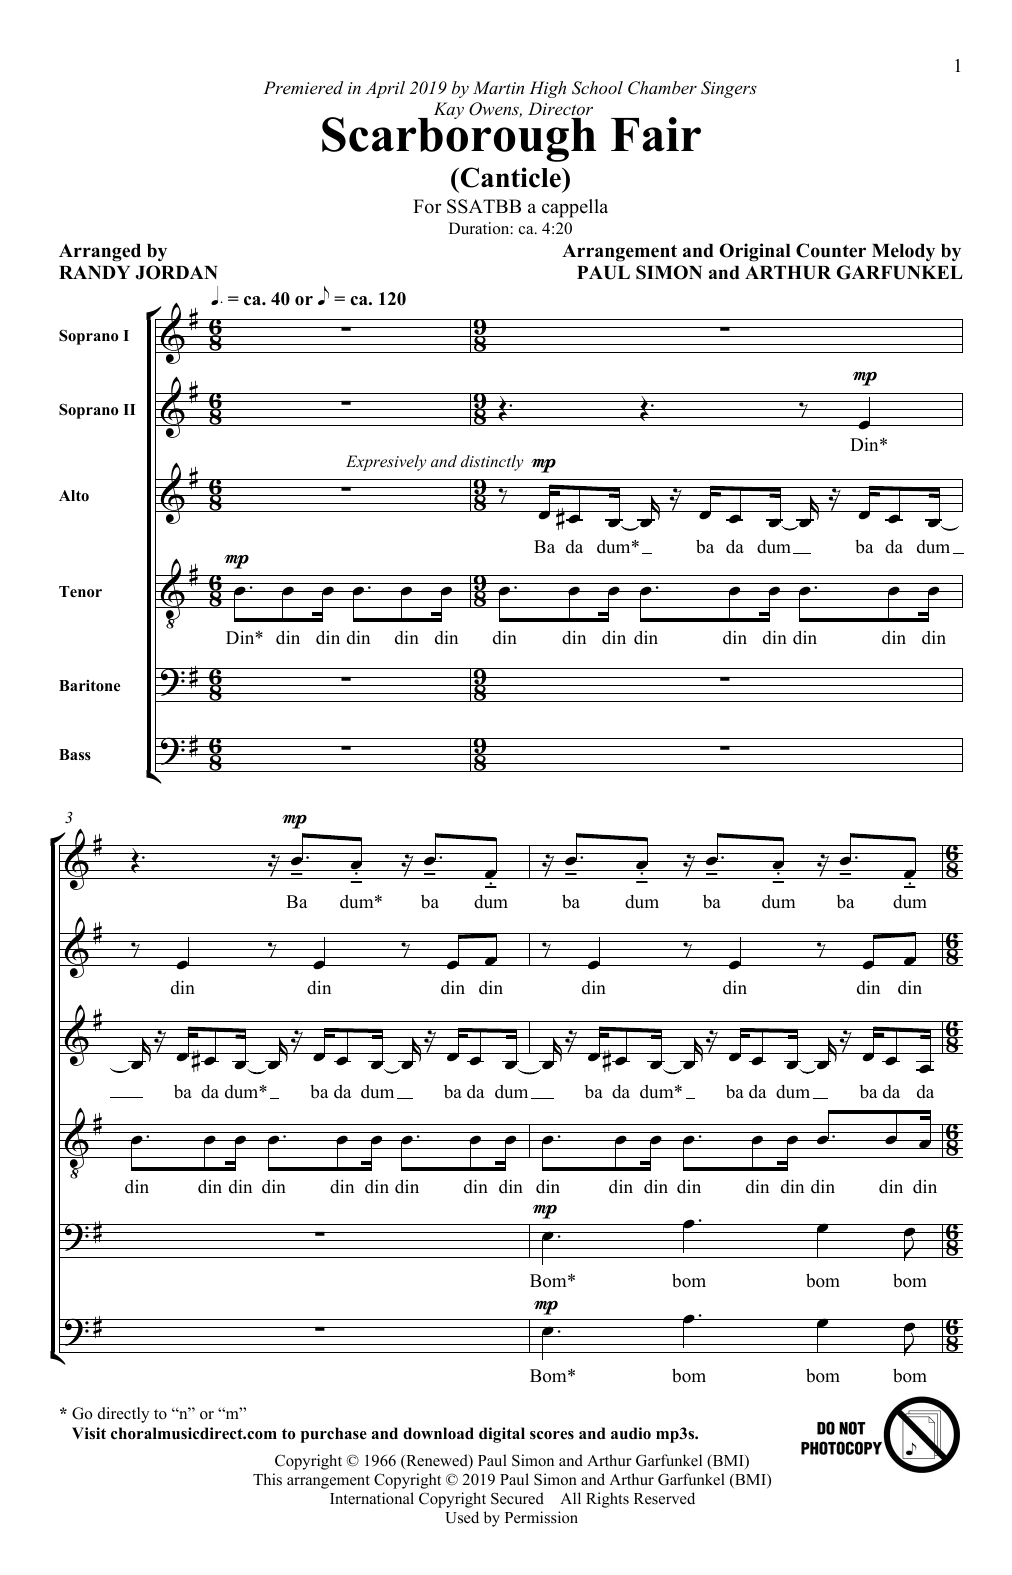 Simon & Garfunkel Scarborough Fair/Canticle (arr. Randy Jordan) Sheet Music Notes & Chords for SATB Choir - Download or Print PDF